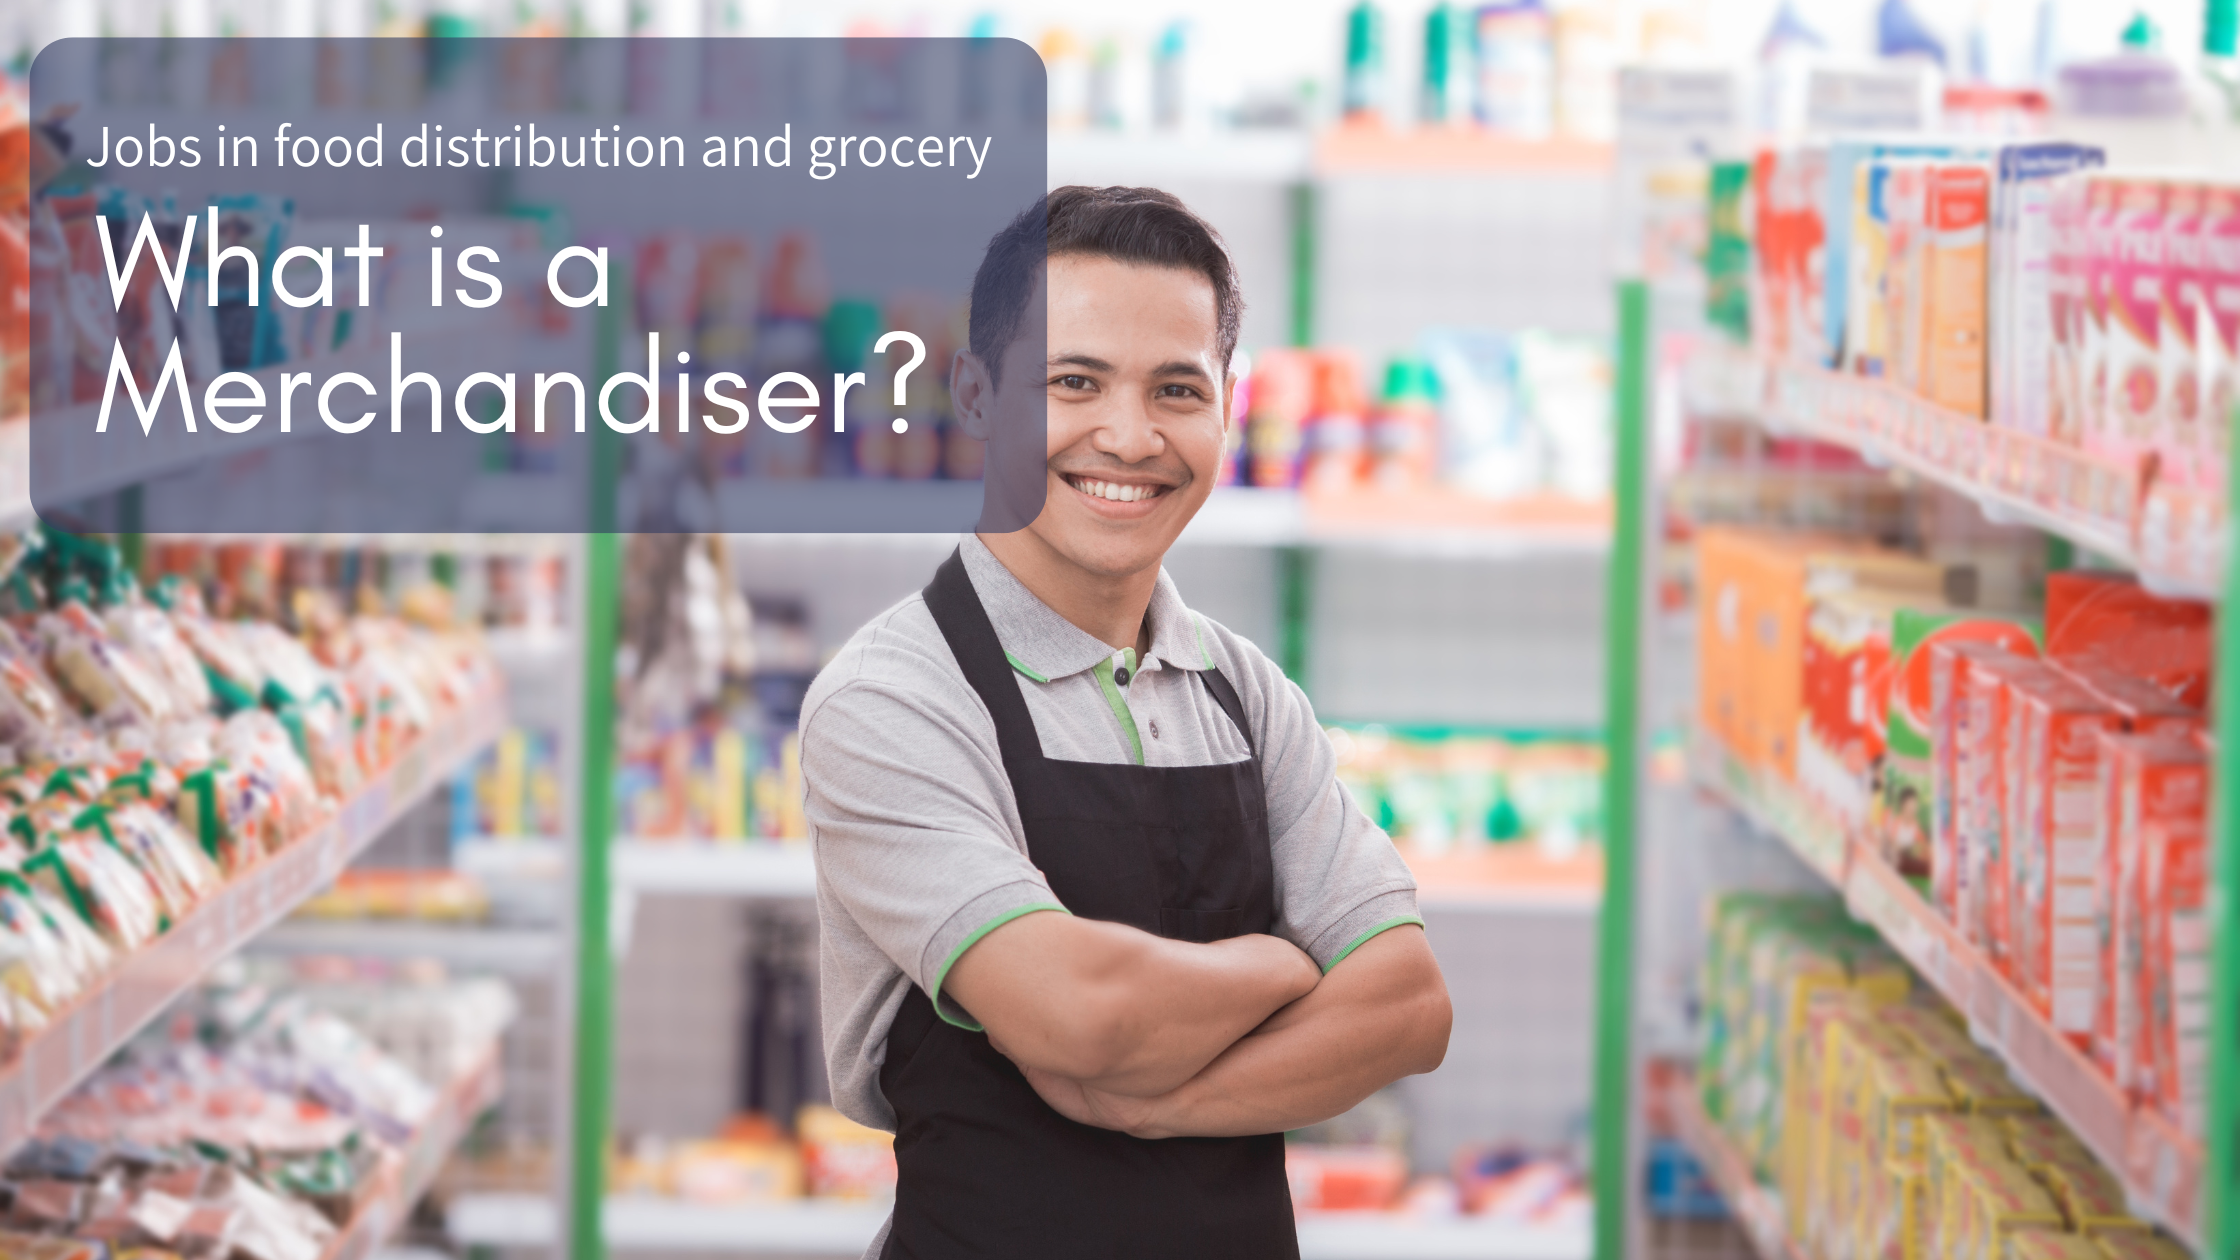 Food Distributor Jobs: What is a Merchandiser?